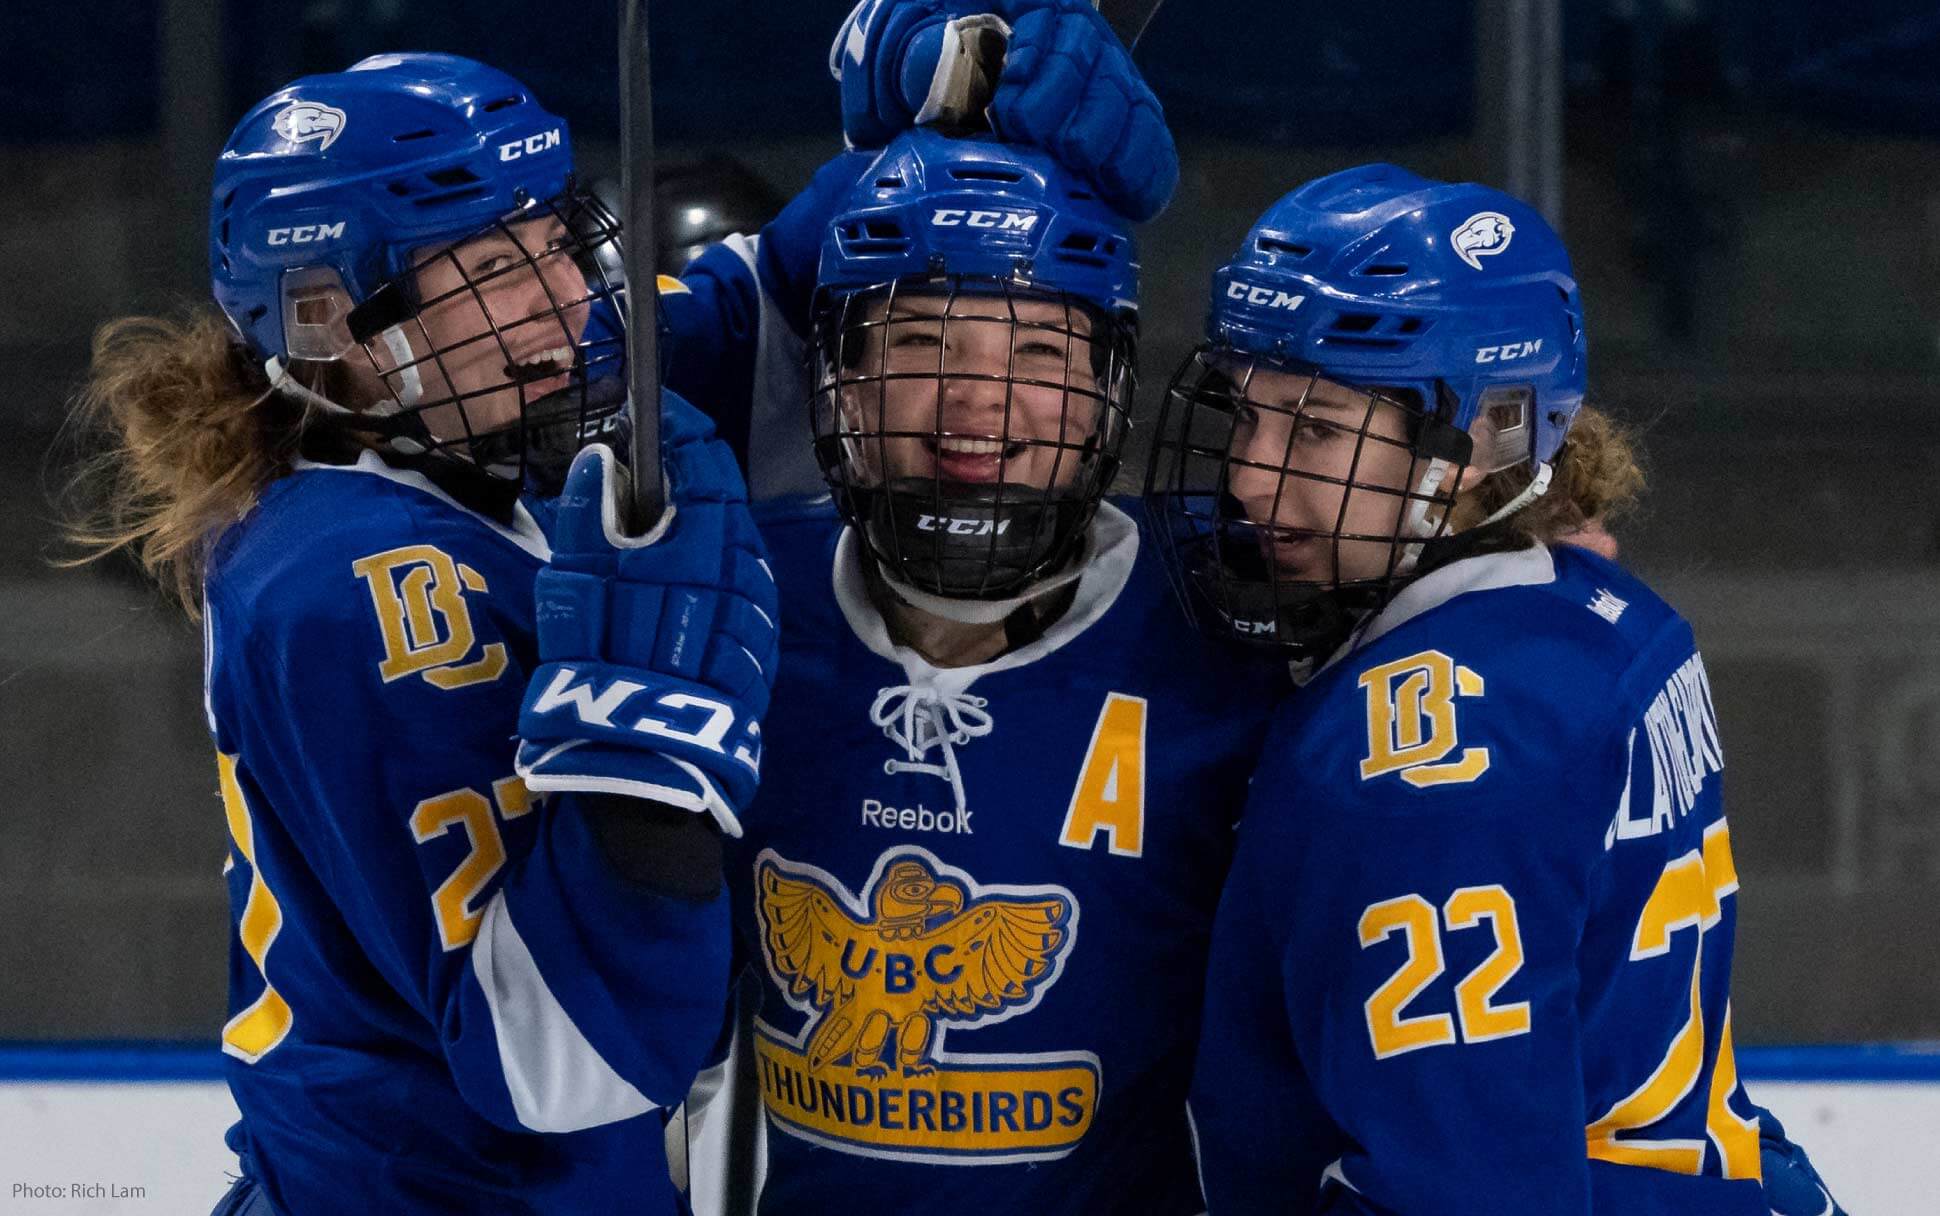 Three players from the UBC Thunderbirds Women's Hockey Team celebrate a goal.